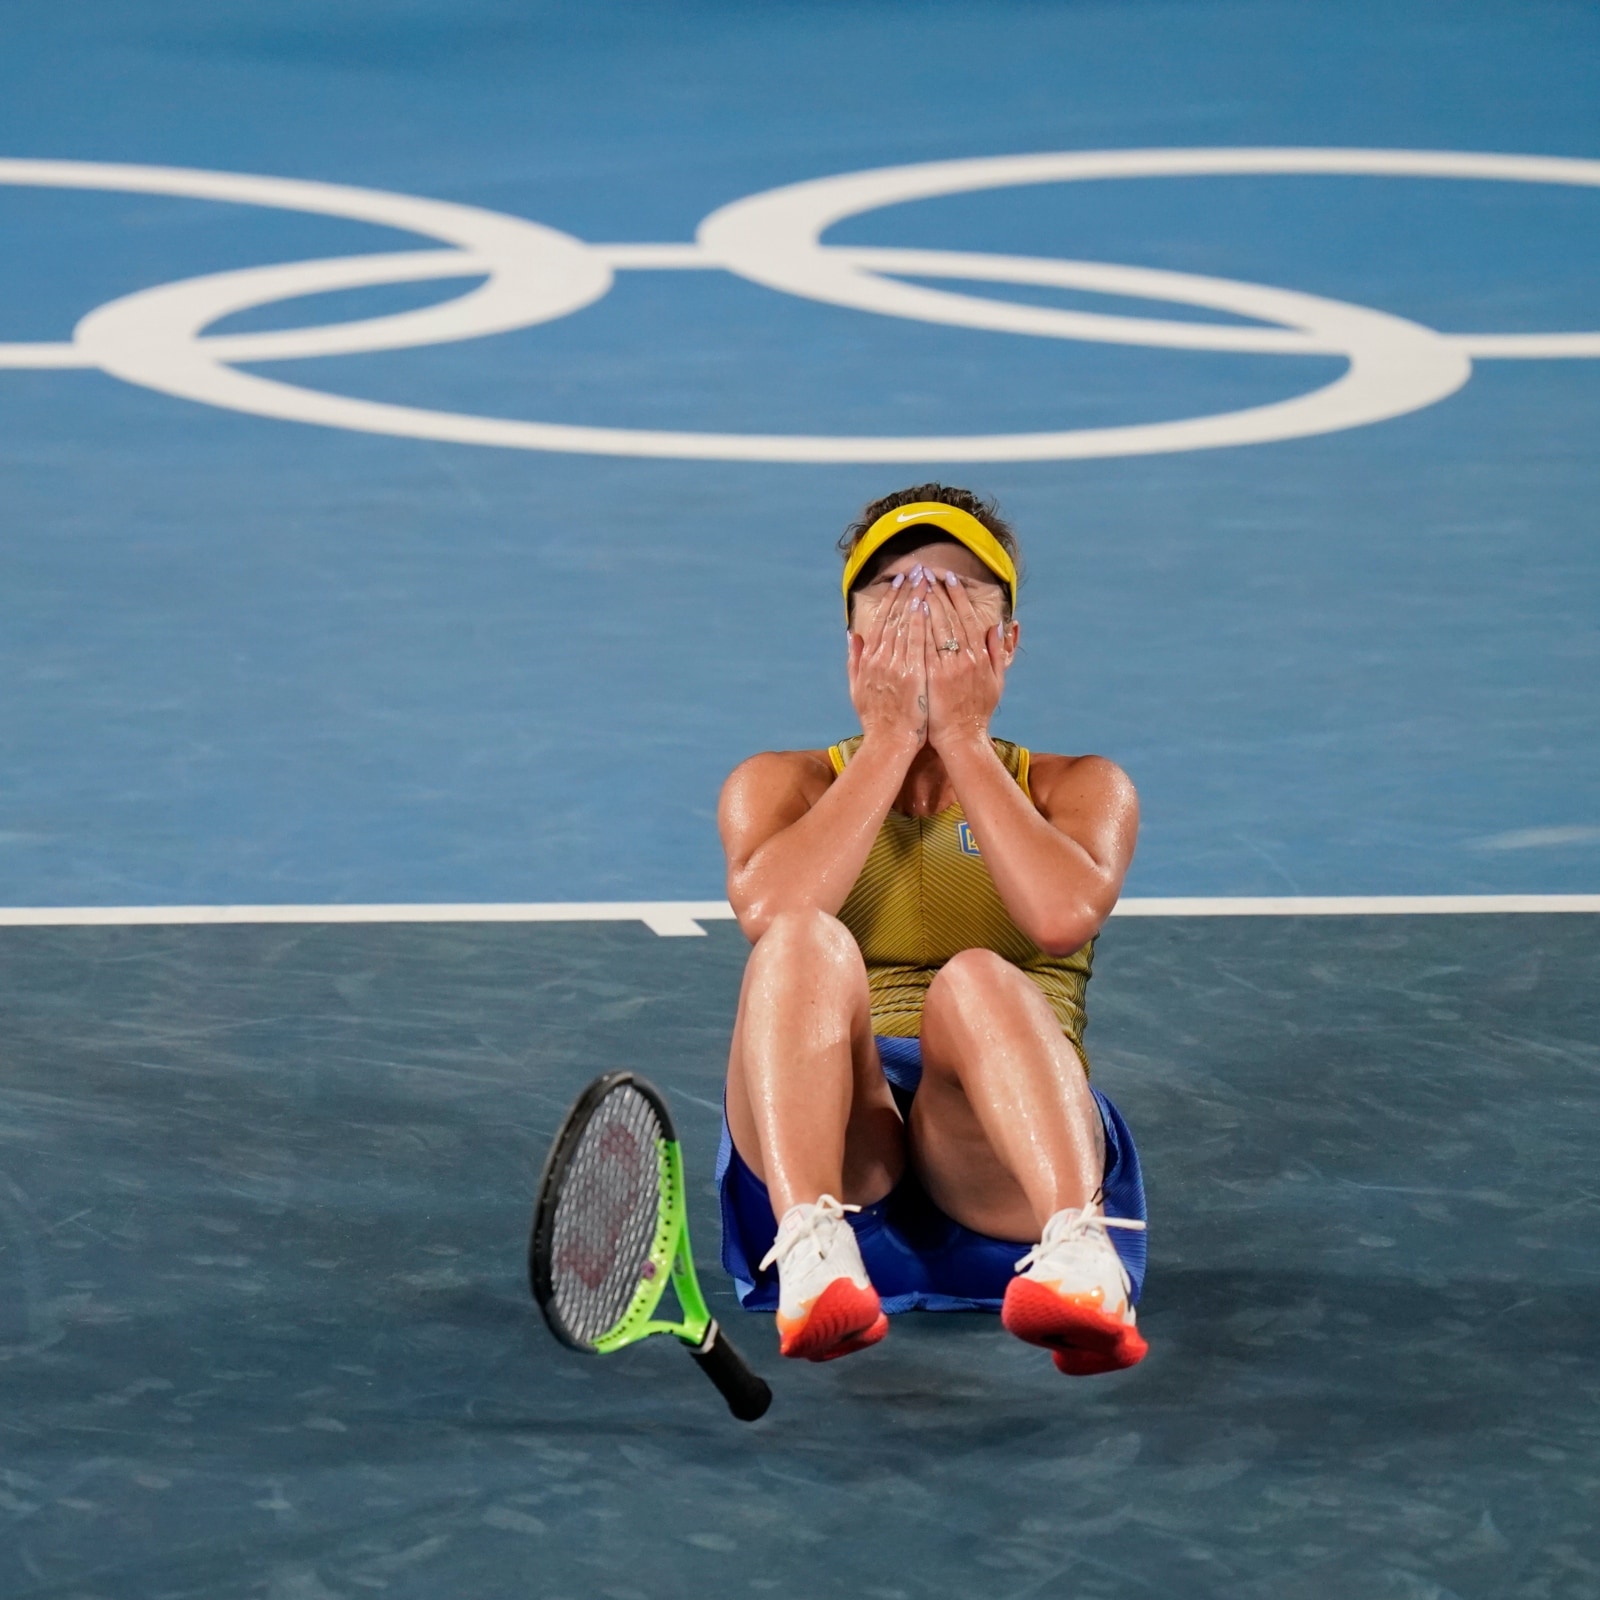 Tokyo Olympics: Elina Svitolina Wins Ukraine's First Olympic Tennis Medal